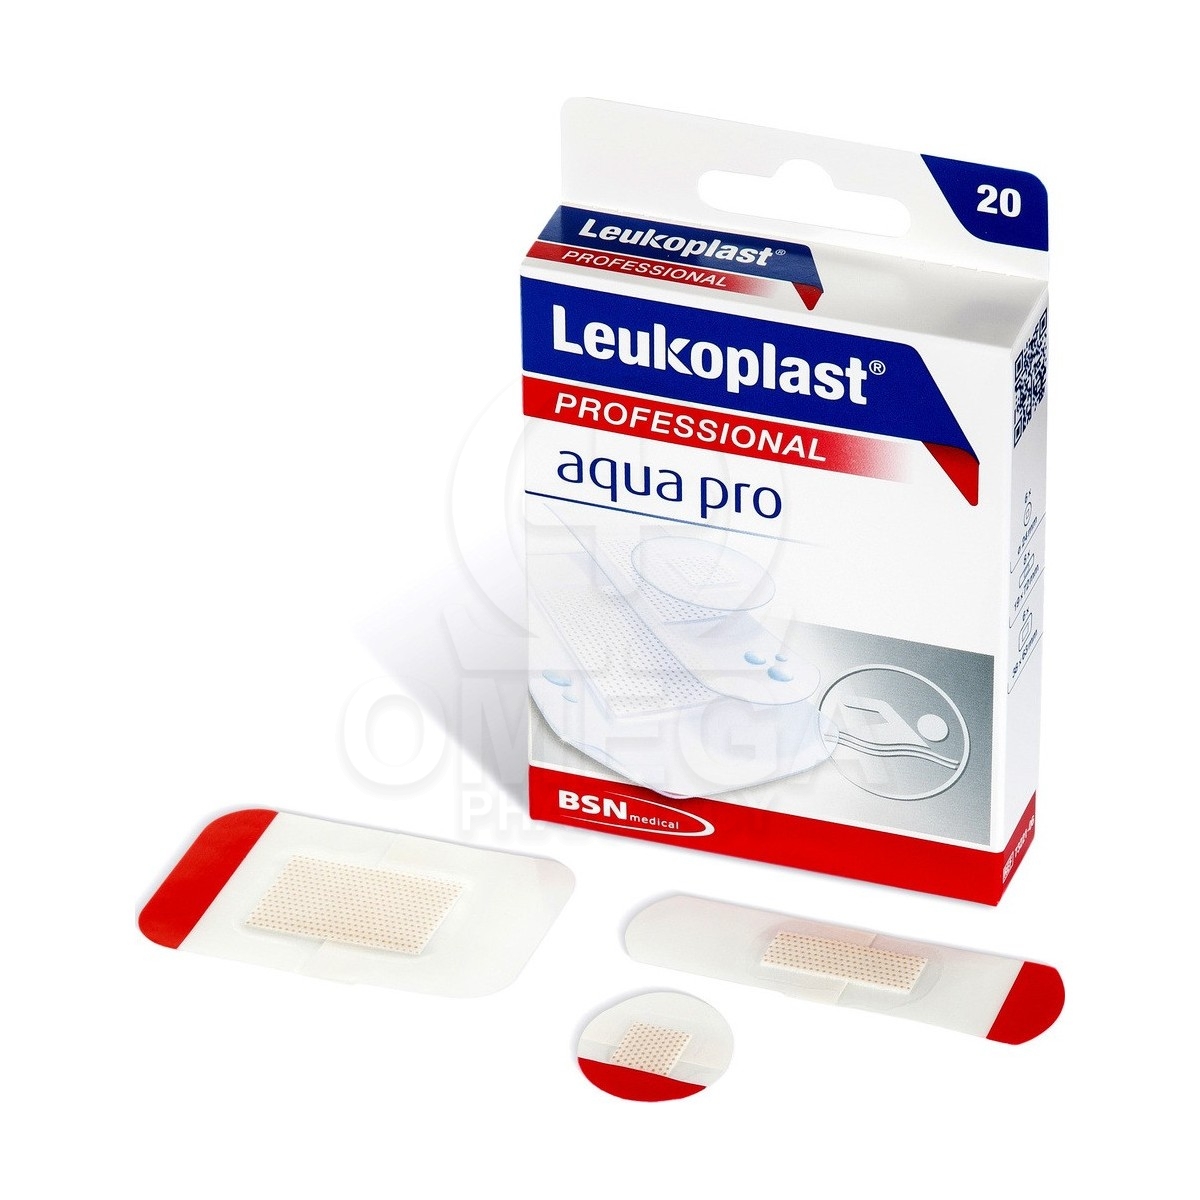 BSN MEDICAL Leukoplast Aqua Pro Αδιάβροχα Αυτοκόλλητα Επιθέματα για  Μικροτραυματισμούς σε 3 μεγέθη 20 τεμάχια